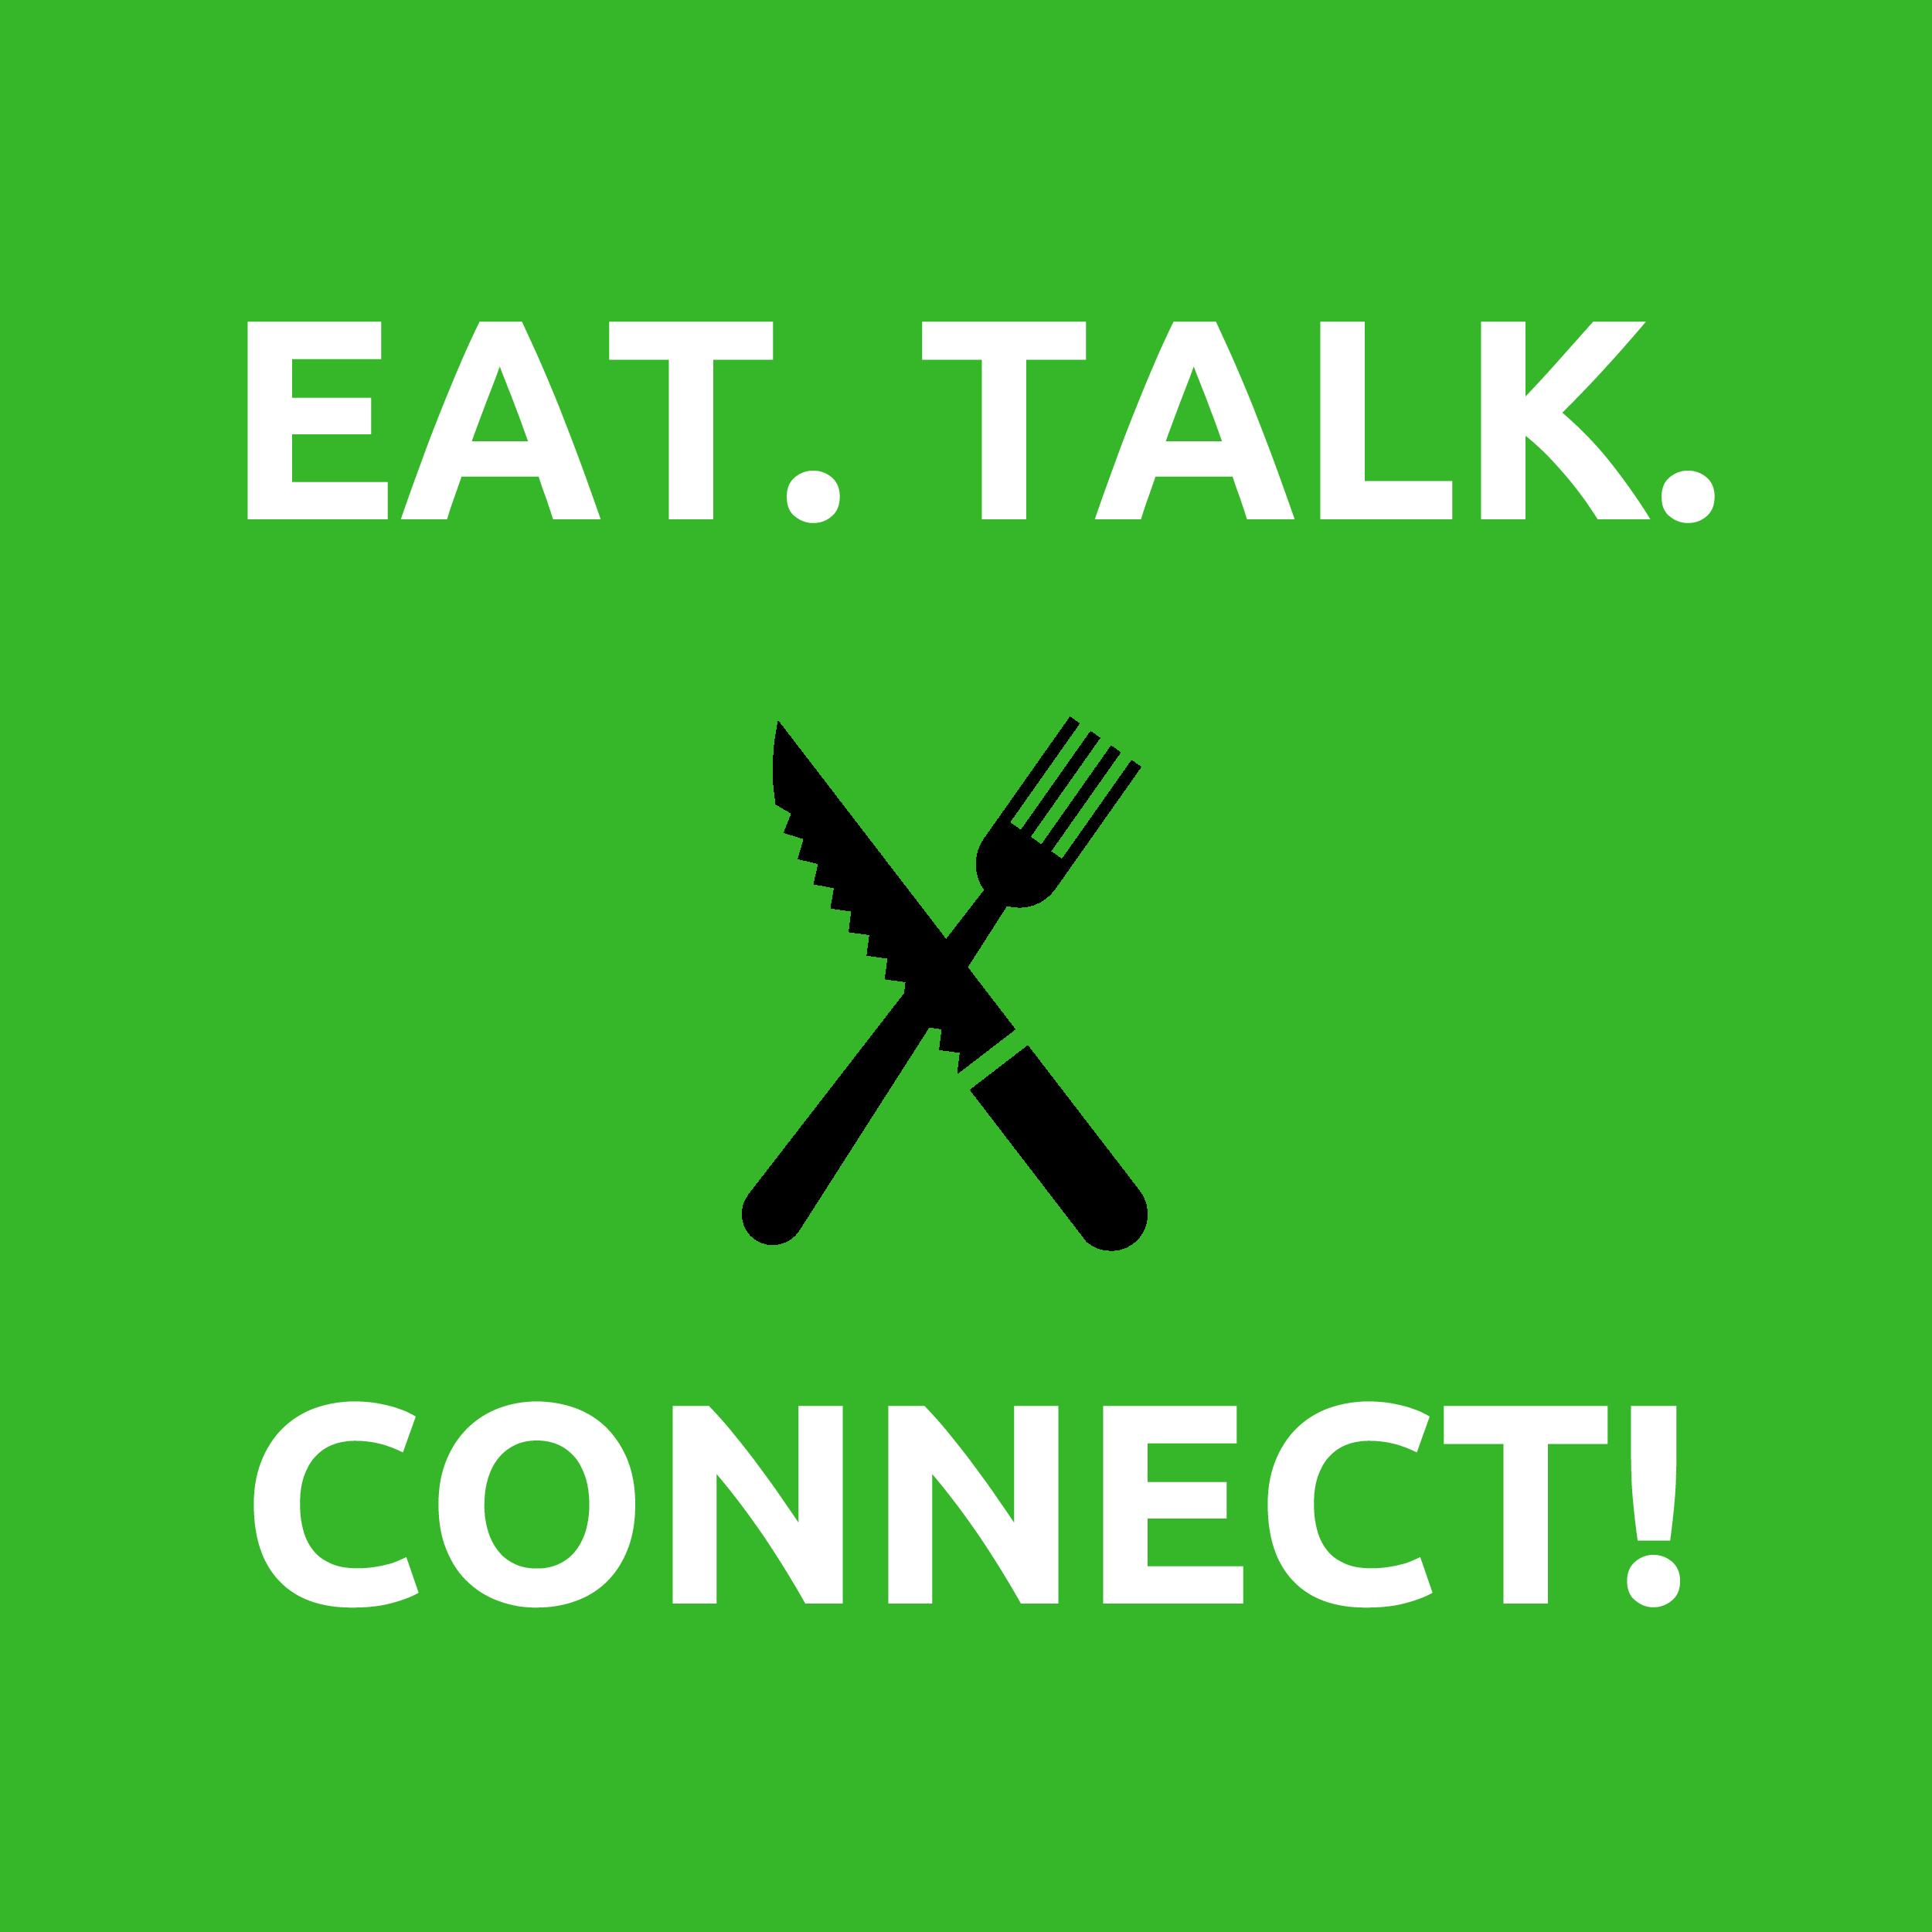 Eat. Talk. Connect!